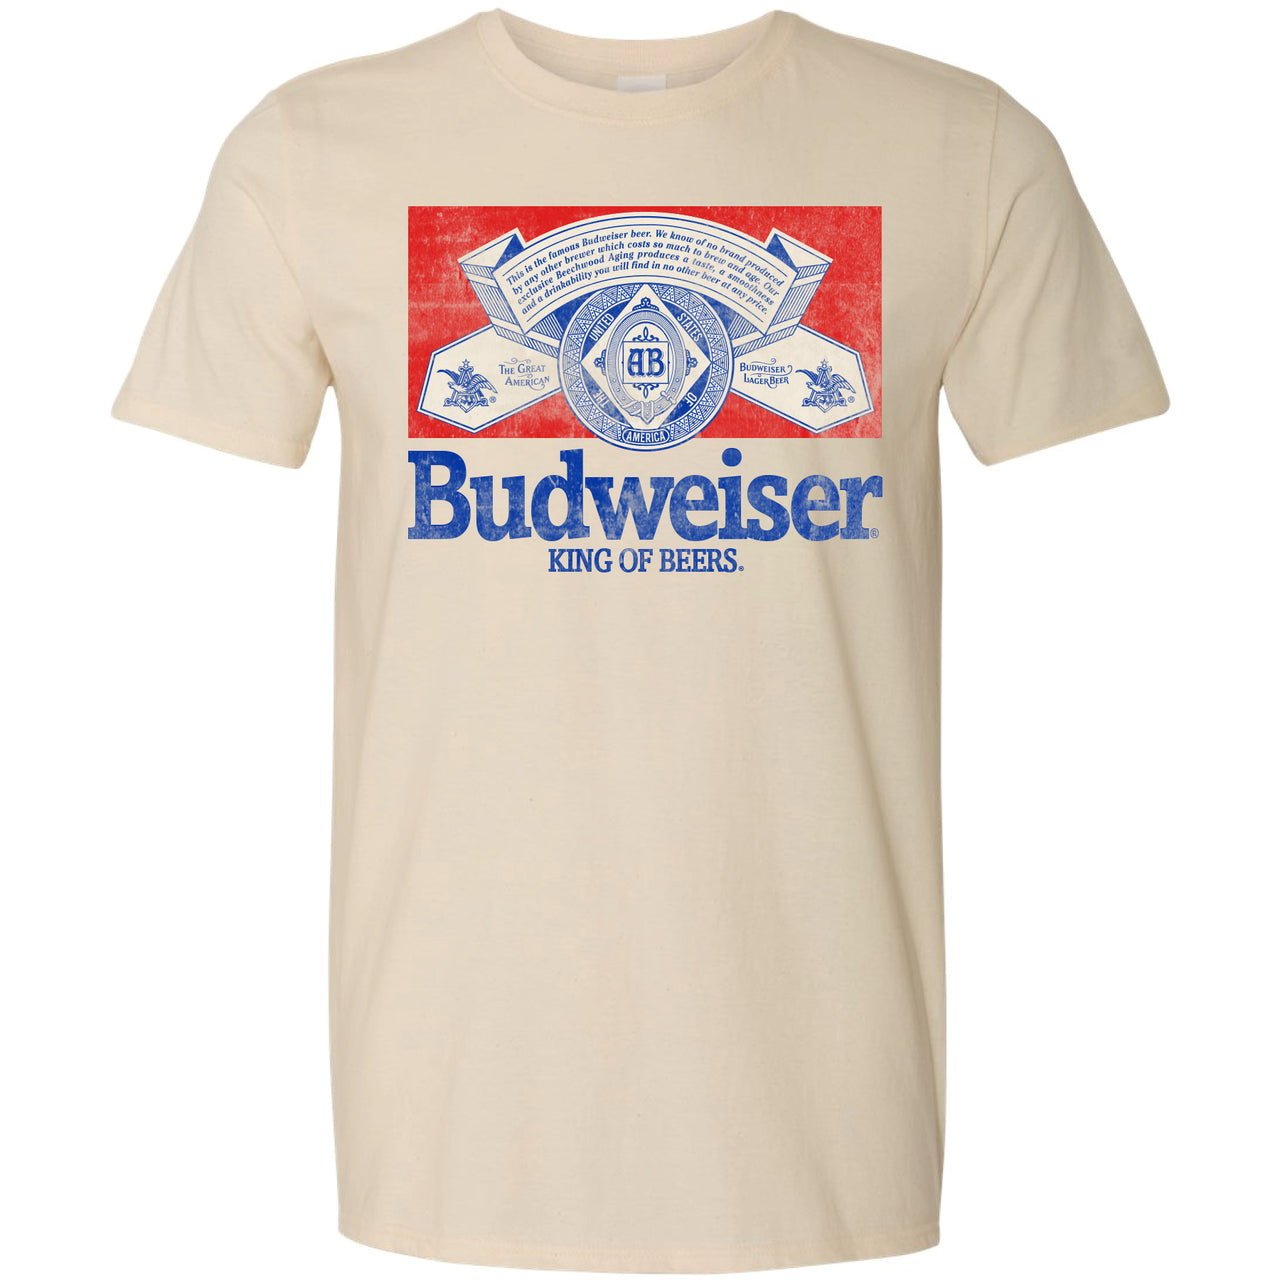 Budweiser Vintage Half Label T-Shirt